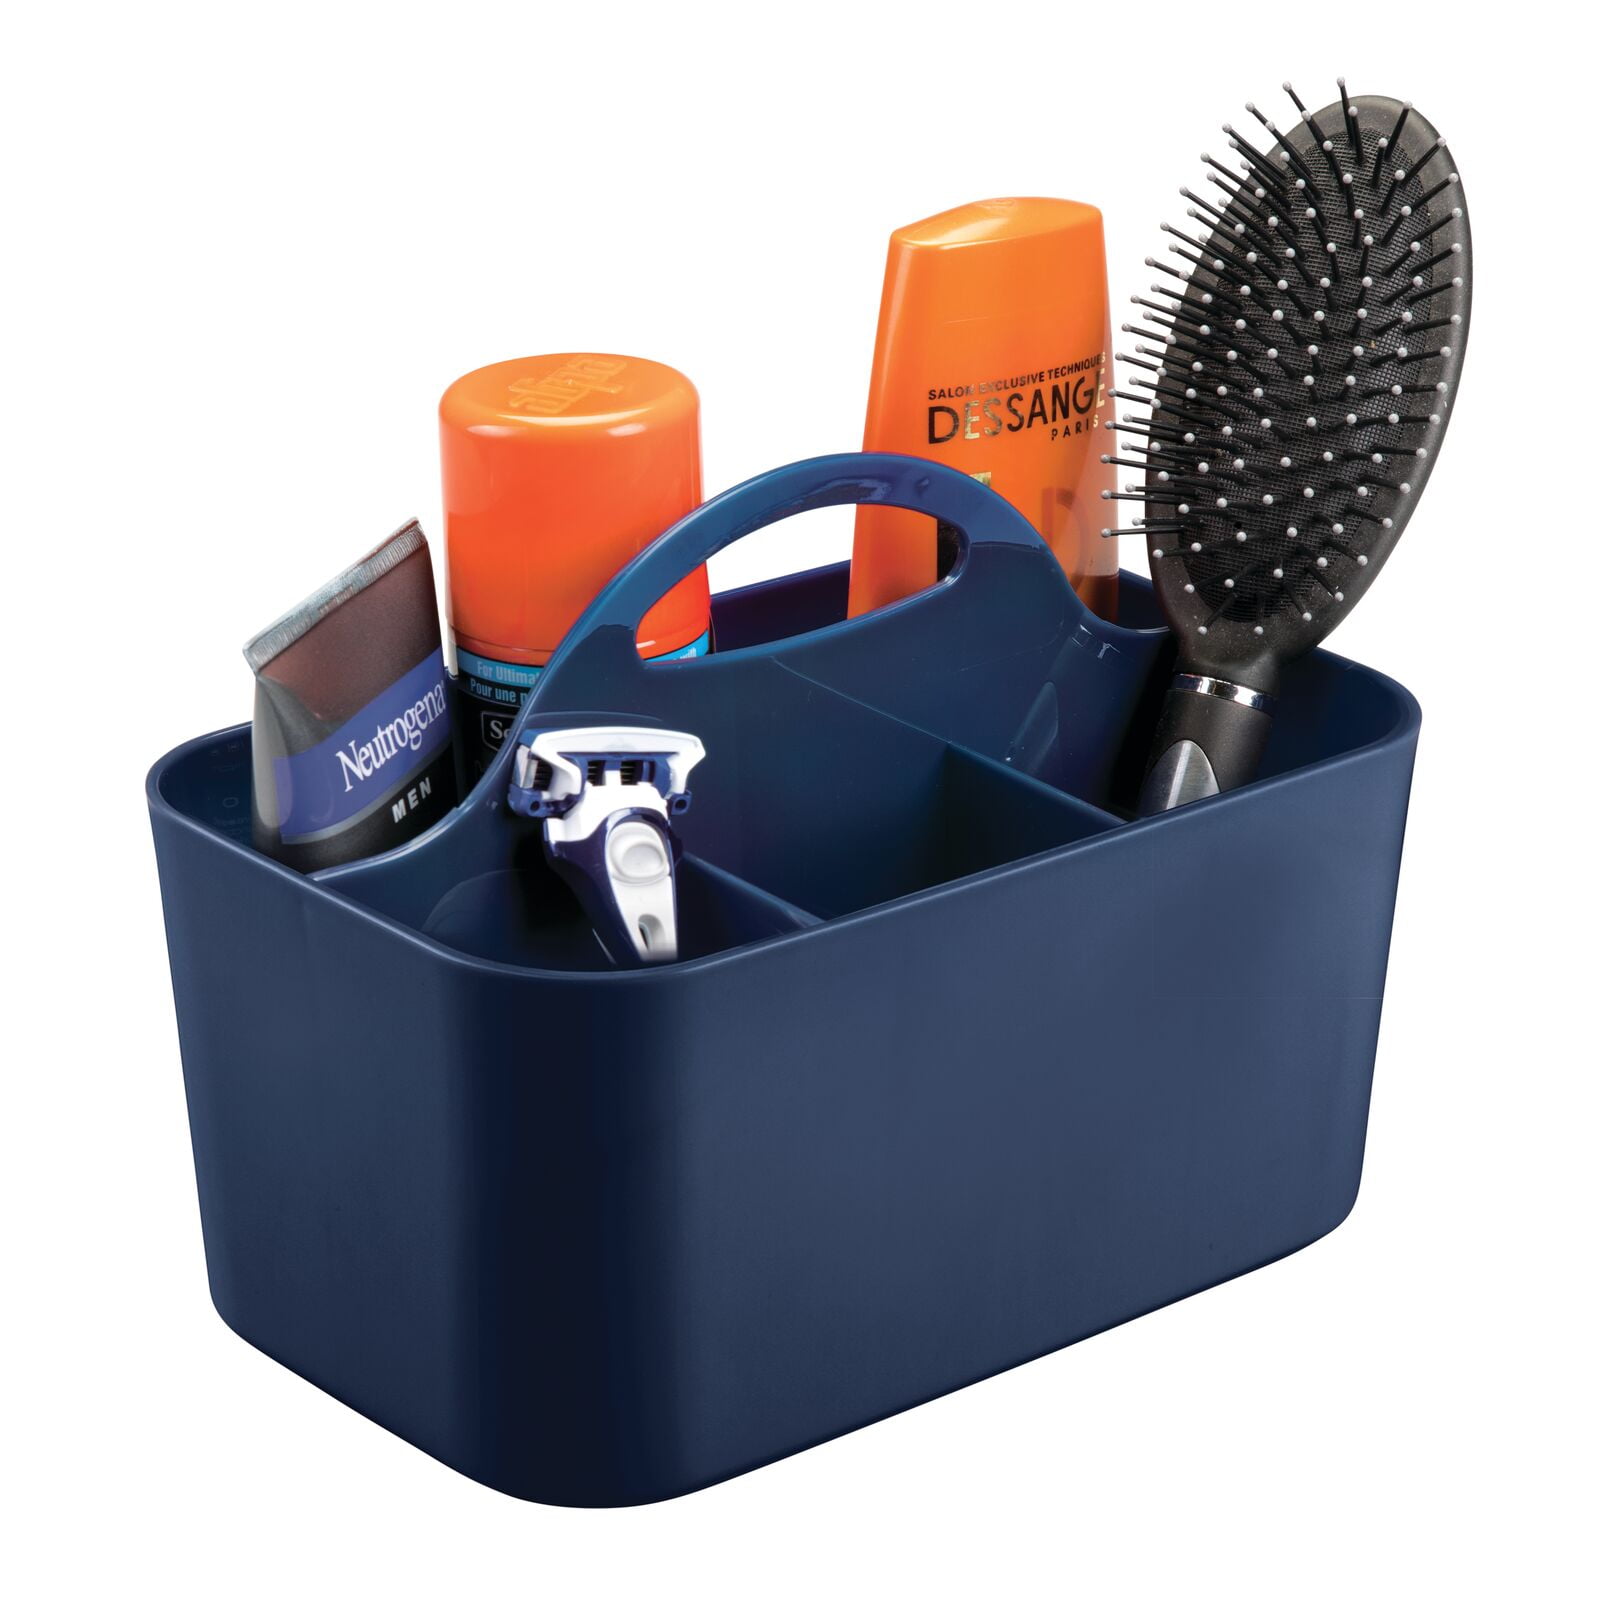 Pretty Comy Plastic Portable Storage Organizer Basket - Bathroom Basket Bin  with Handle for Bathroom, Shower, Dorm Room - Holds Hand Soap, Body Wash,  Shampoo, Conditioner, Lotion 